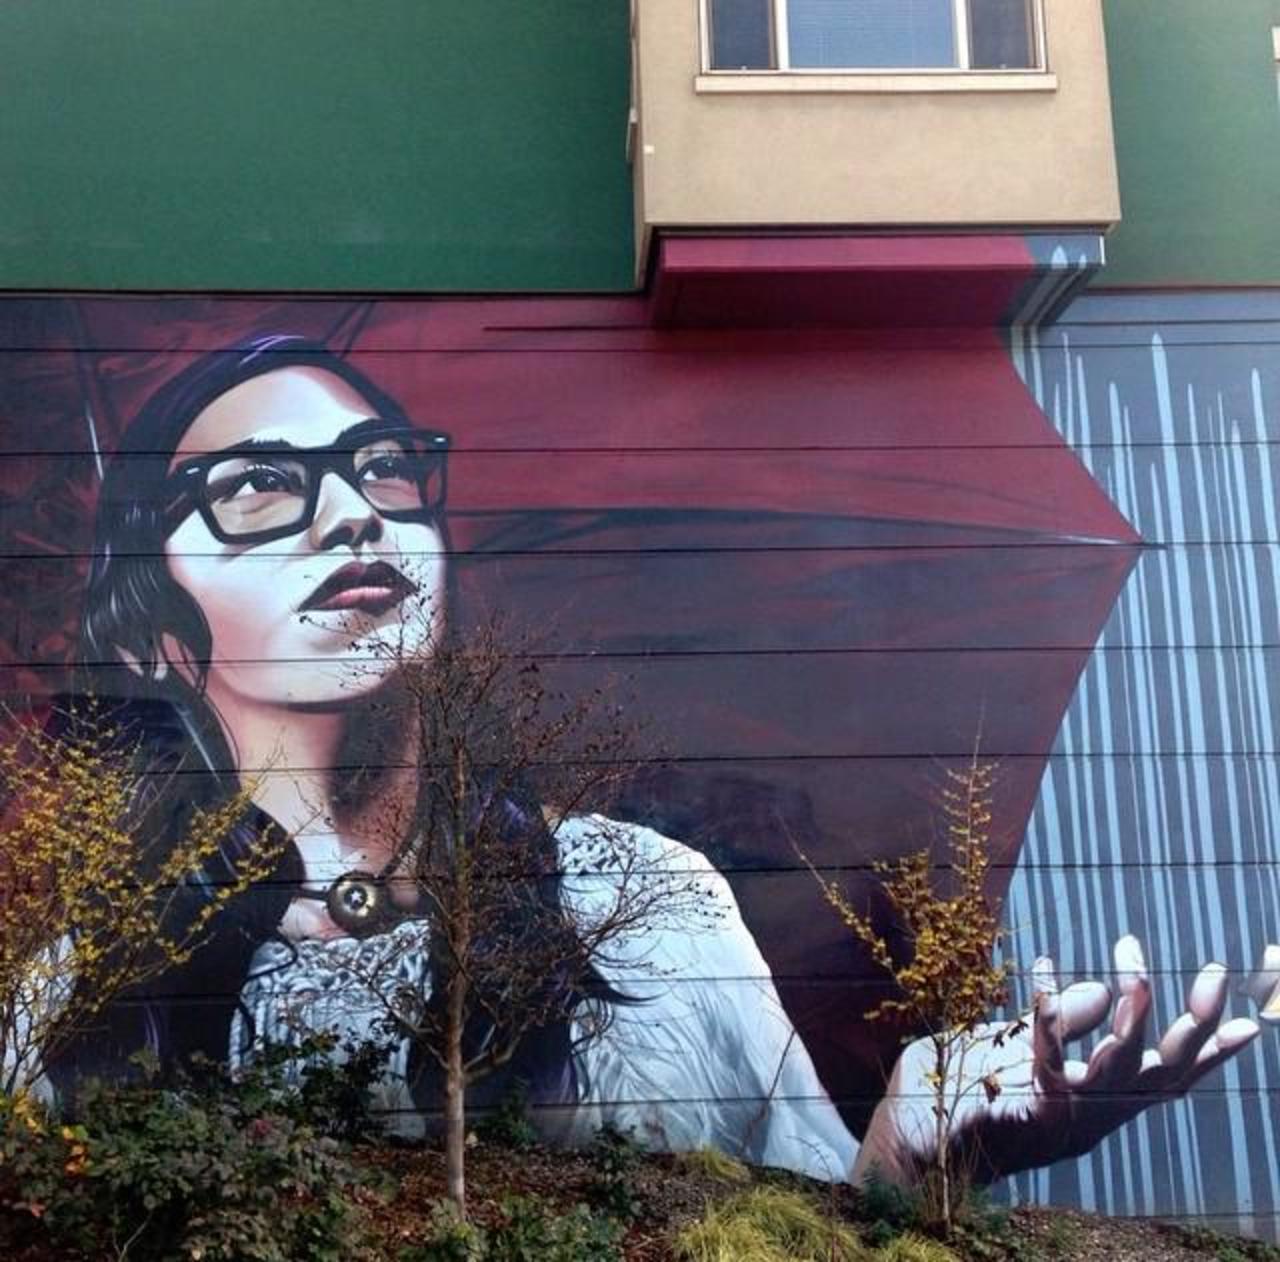 Artist Eras MFK Street Art piece in Capitol Hill, Seattle

#art #mural #graffiti #streetart http://t.co/UxZf0HRhq5